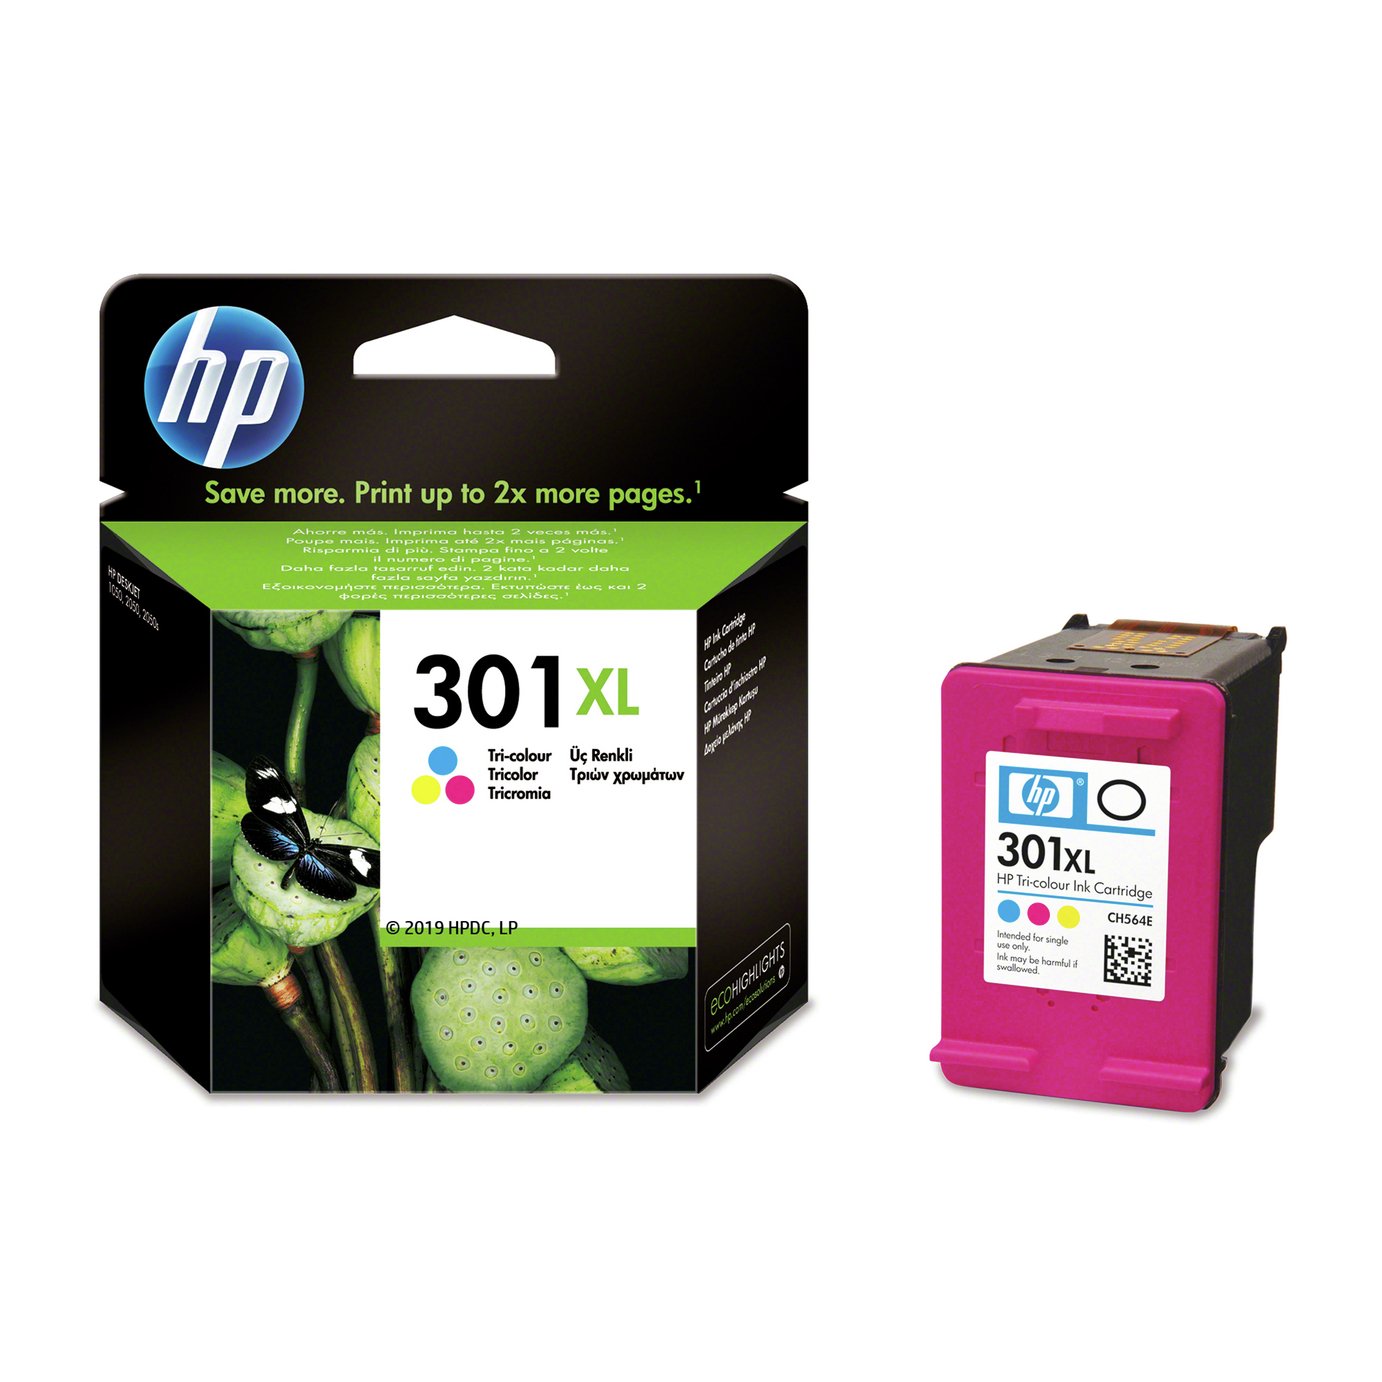 HP 301 XL High-Yield Original Ink Cartridges Review